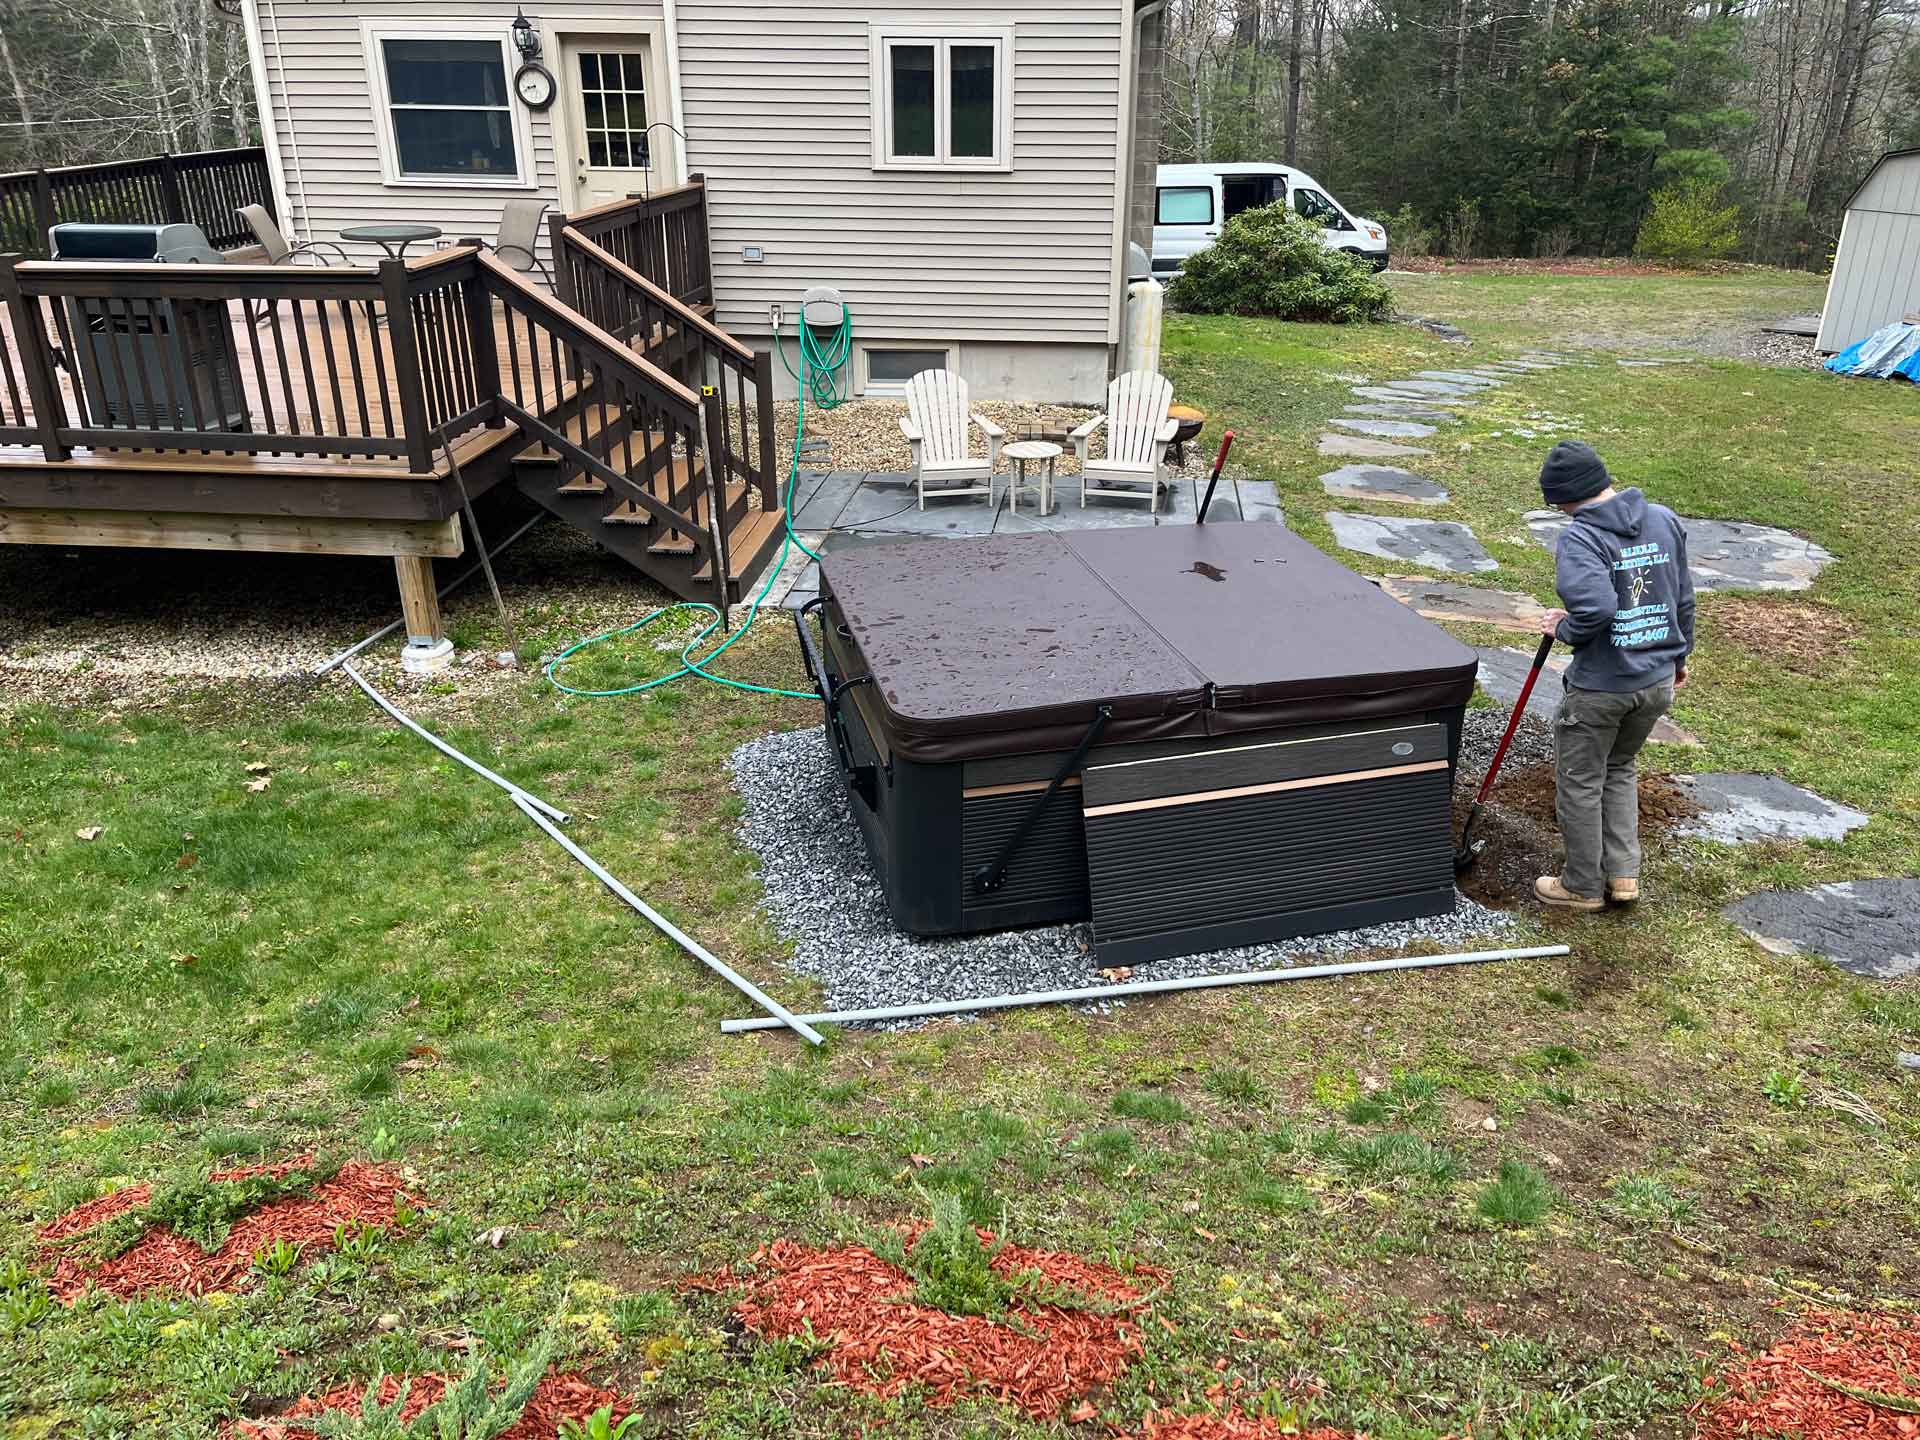 Electrician hooking up hot tub in backyard